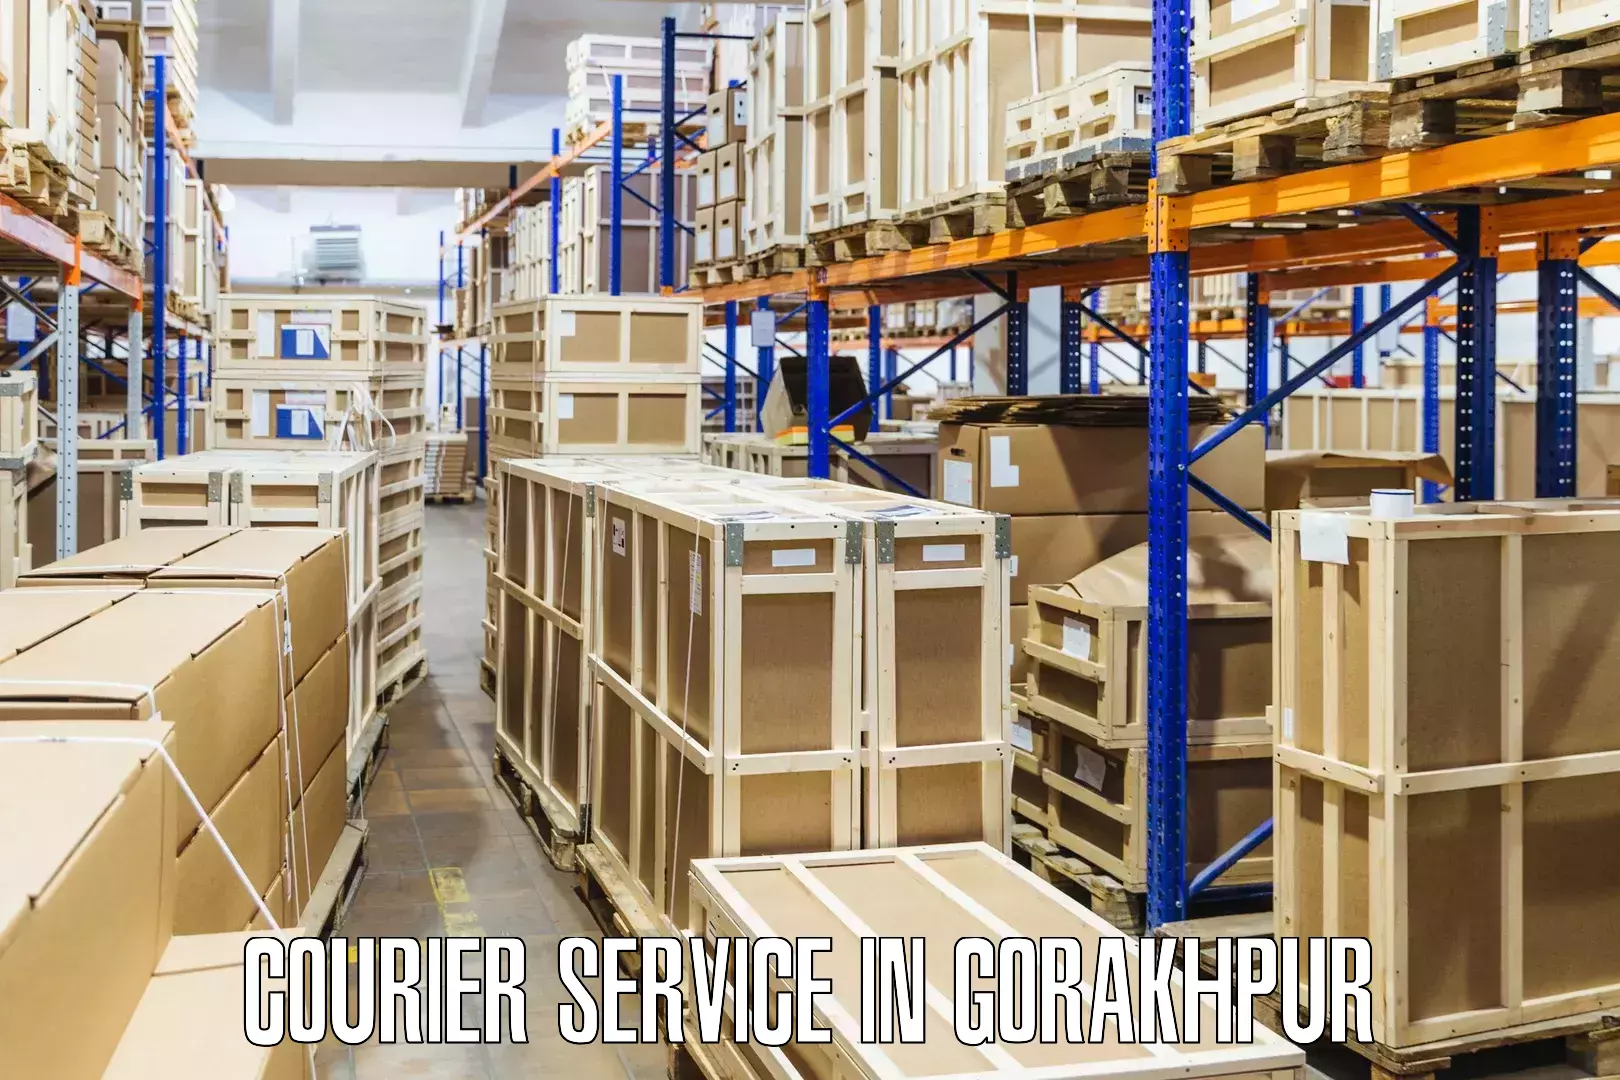 Customer-friendly courier services in Gorakhpur